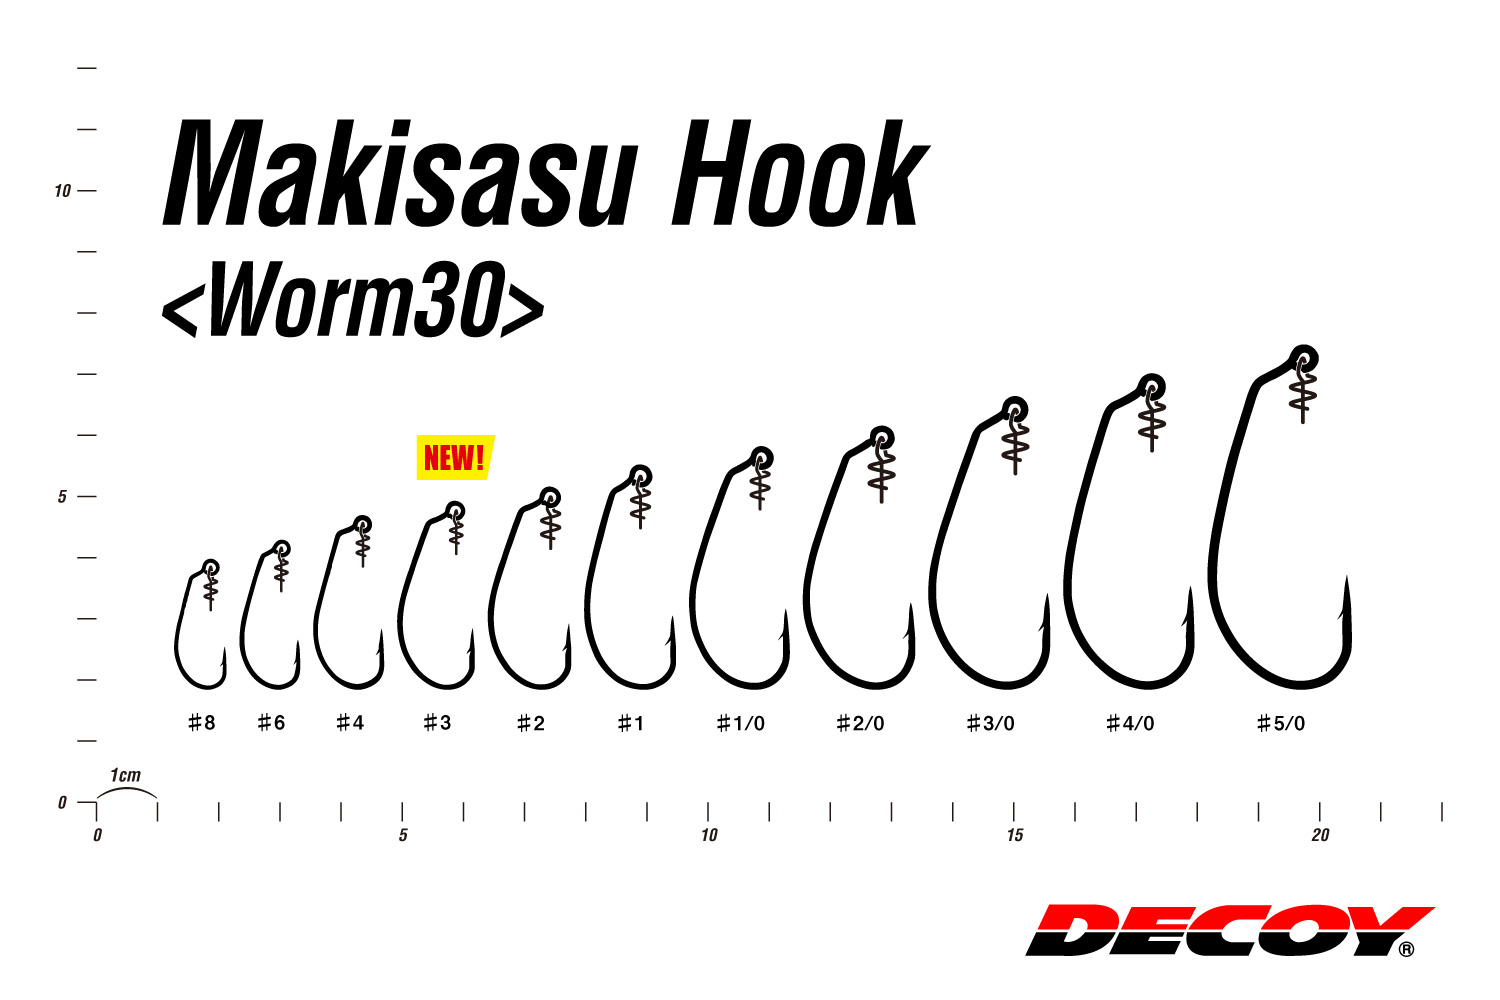 Ami-spring-wide-gap-worm-hook-decoy-makisasu-hook-worm-30-m-lurefishing-planet-negozio-pesca-online-fishing-shop-chart-size.